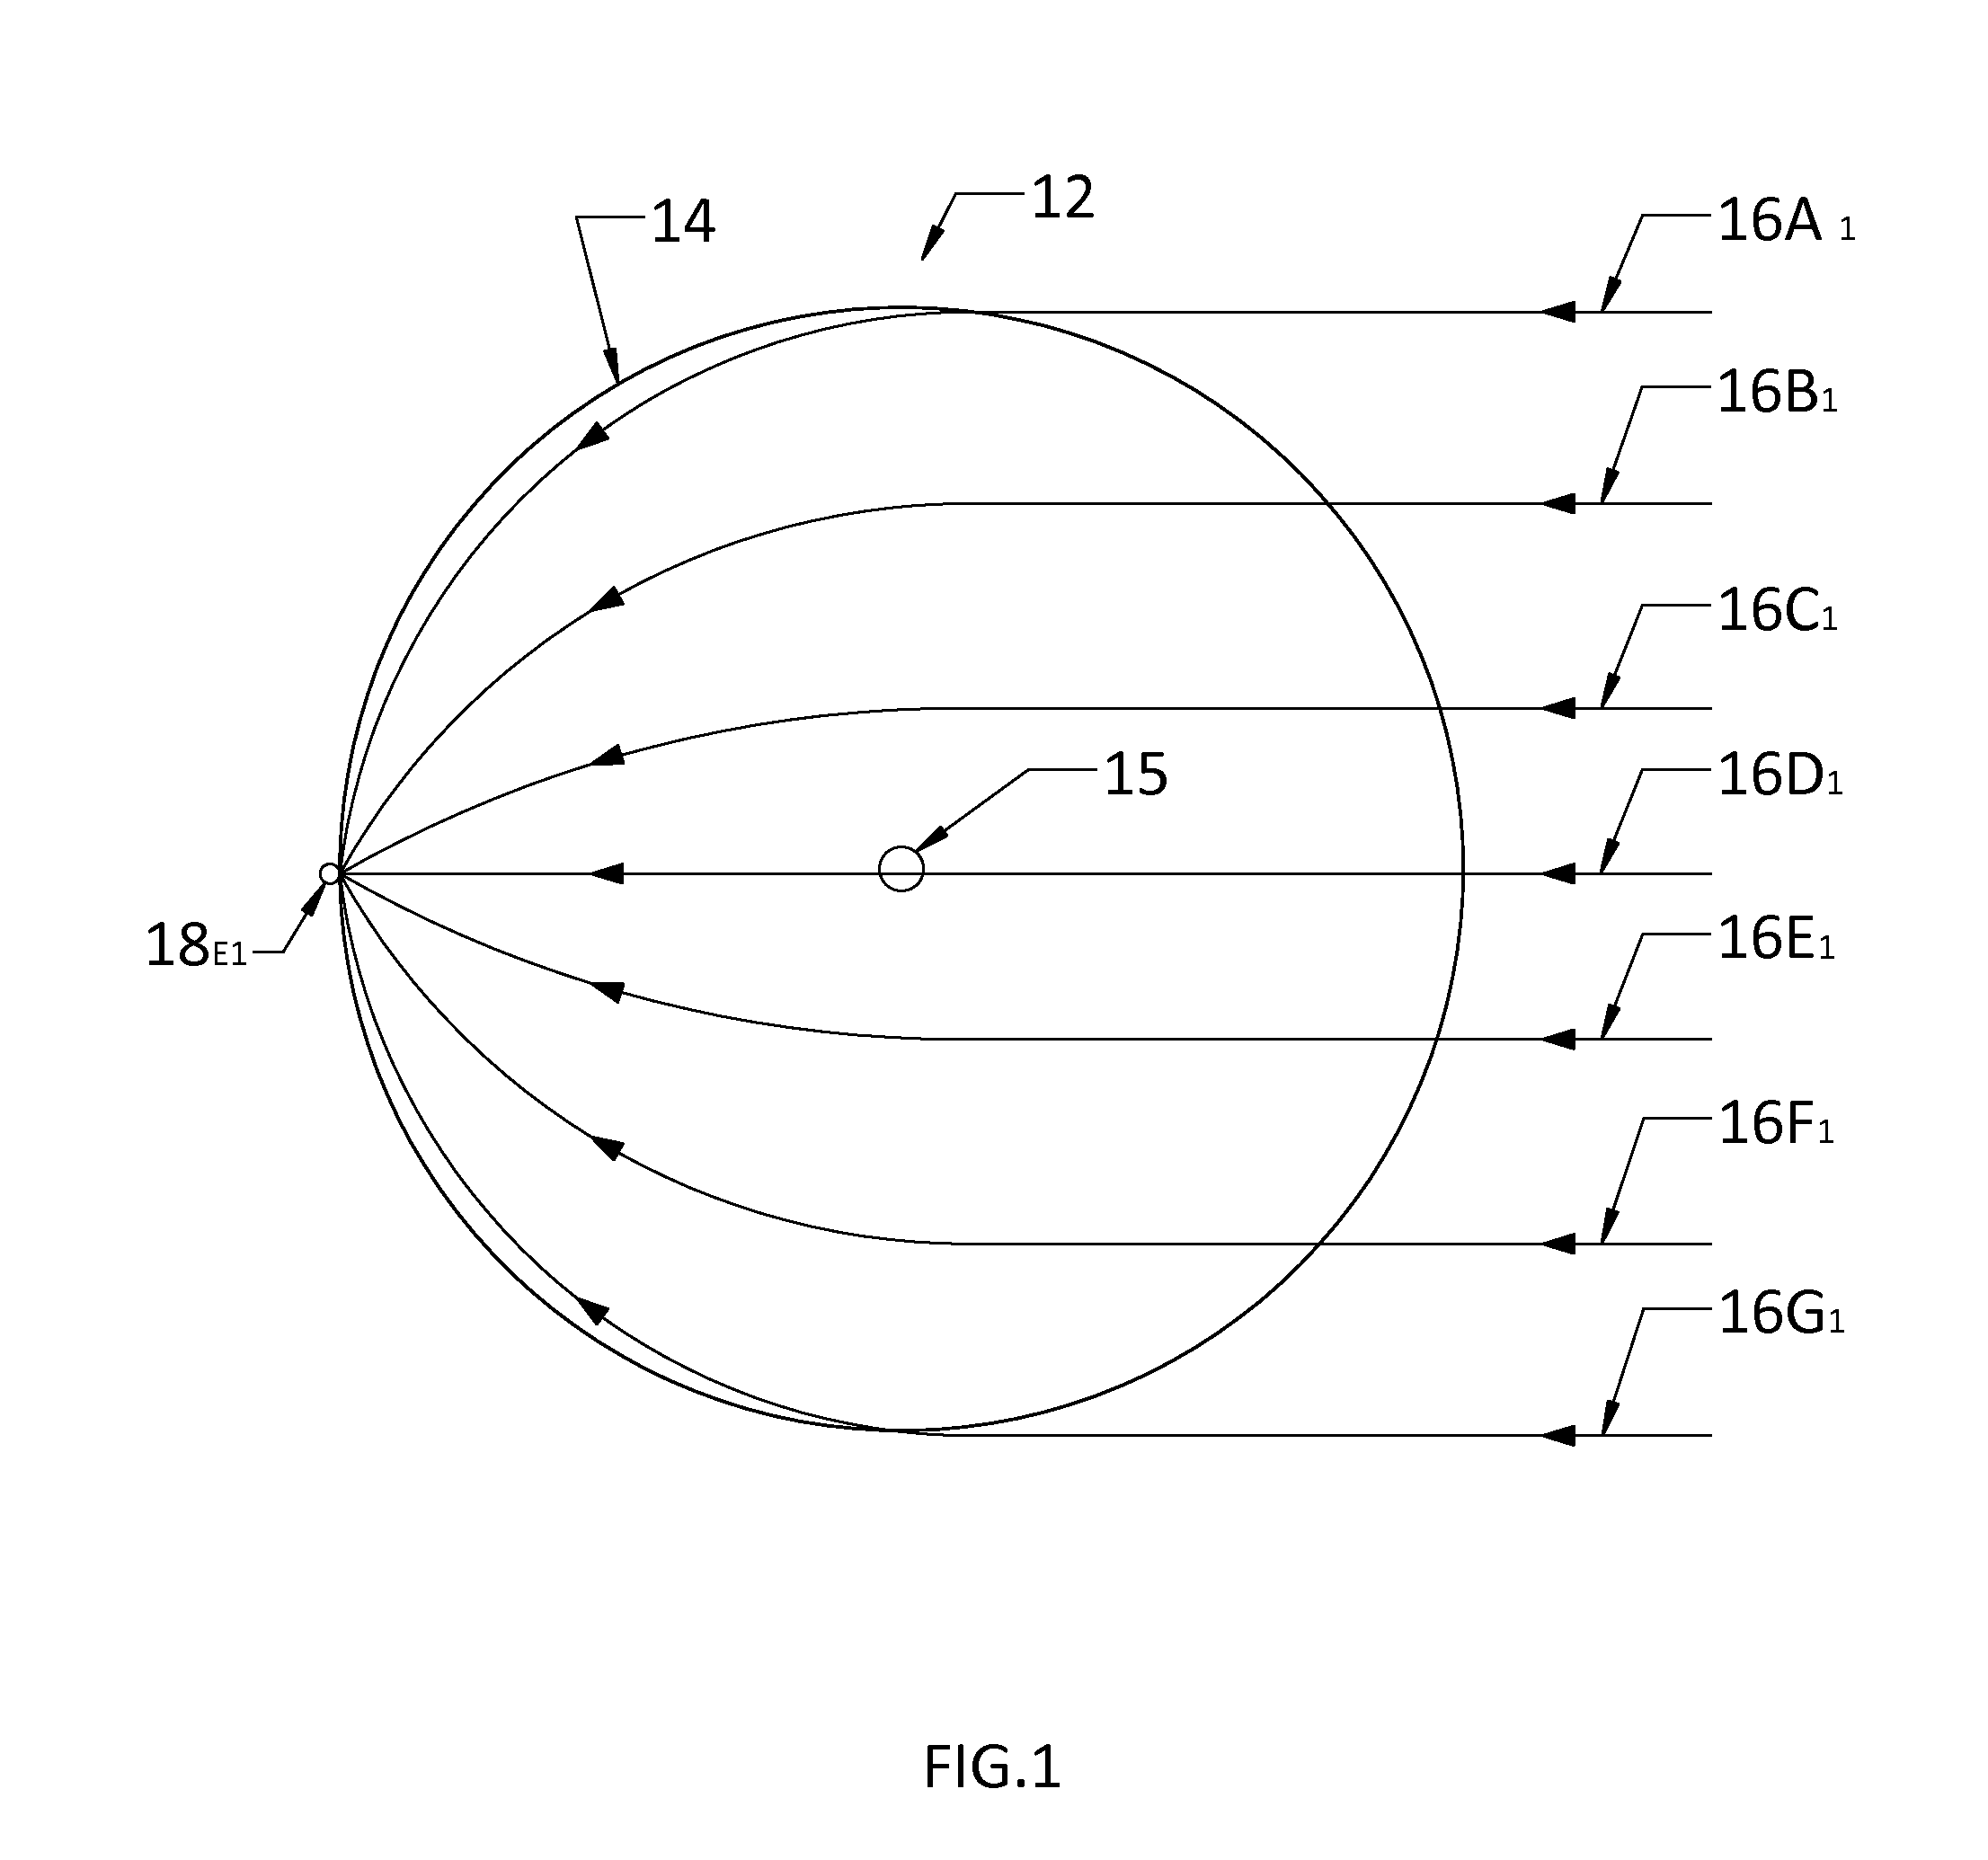 Conformal array, luneburg lens antenna system